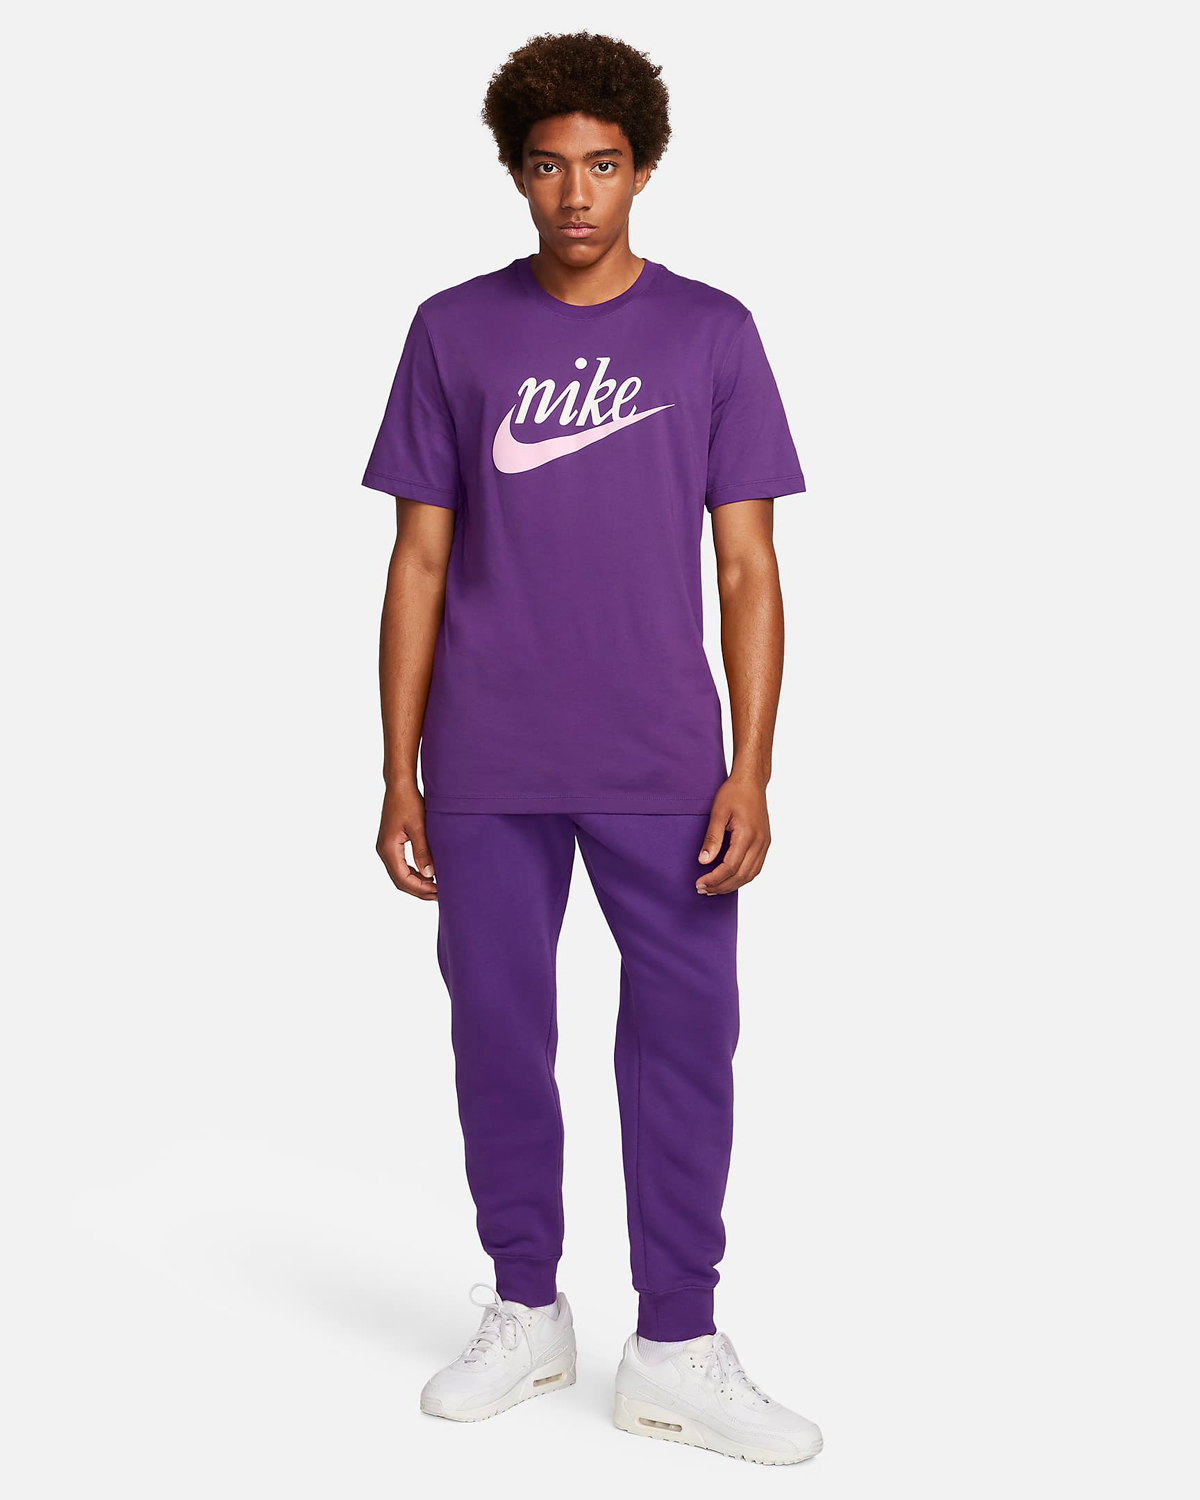 Nike-Sportswear-T-Shirt-Purple-Cosmos-Outfit